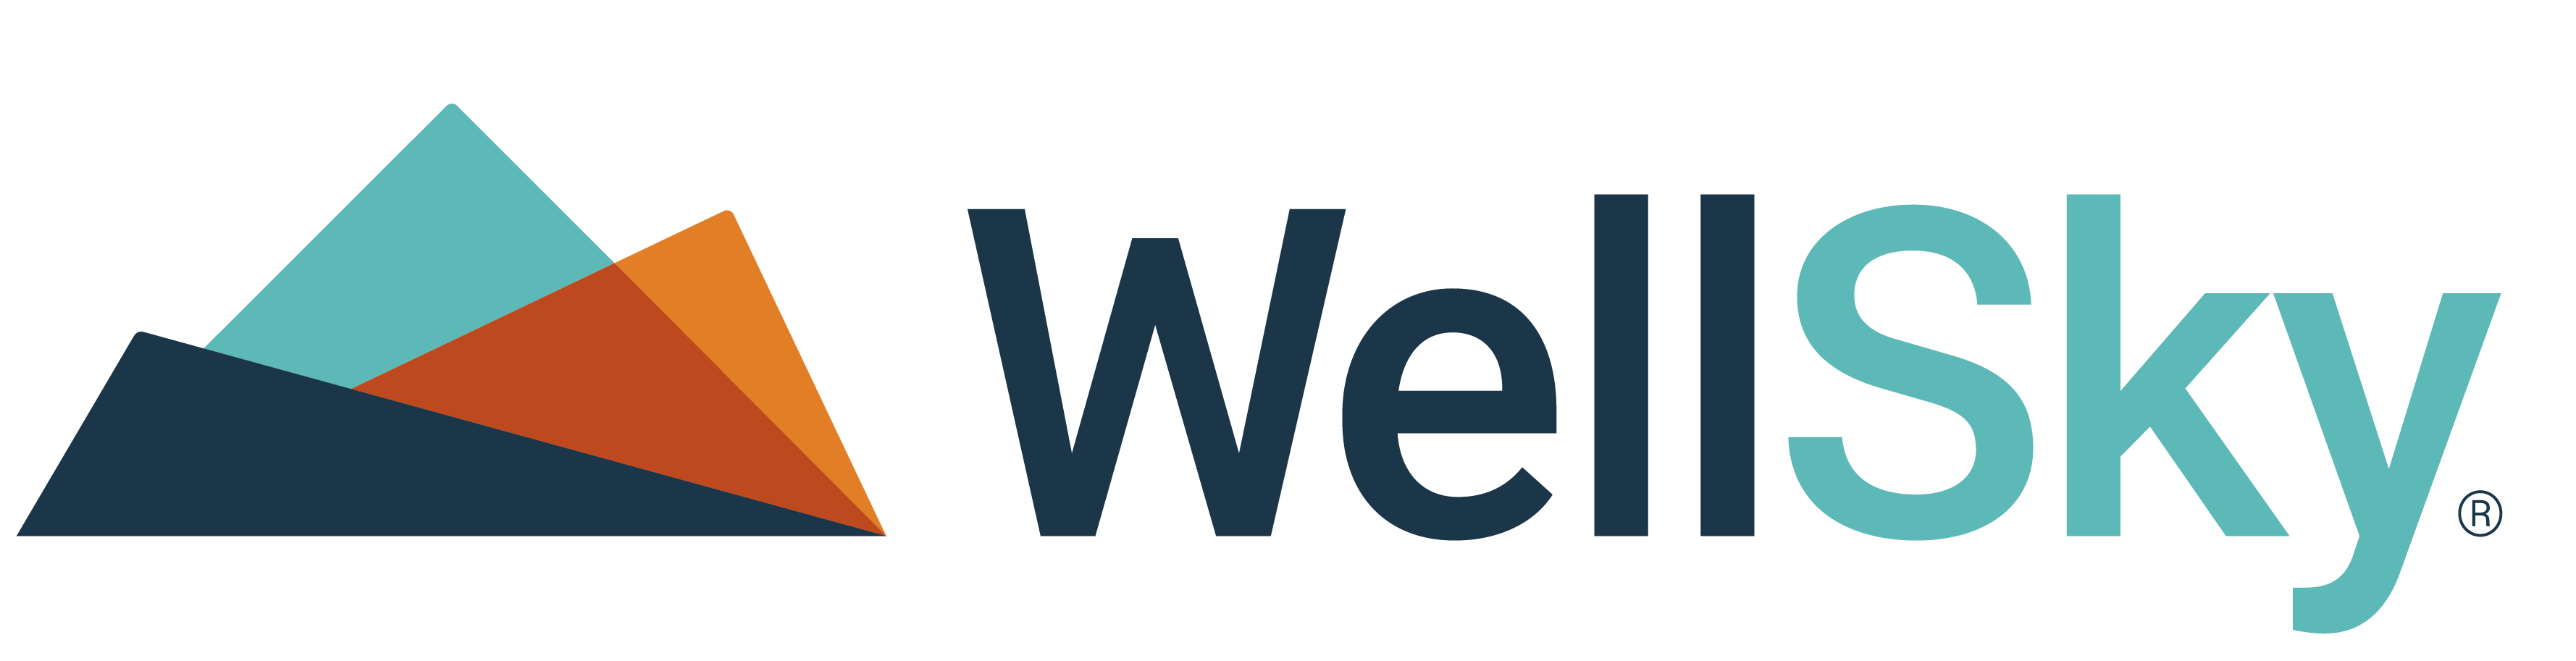 WellSky logo